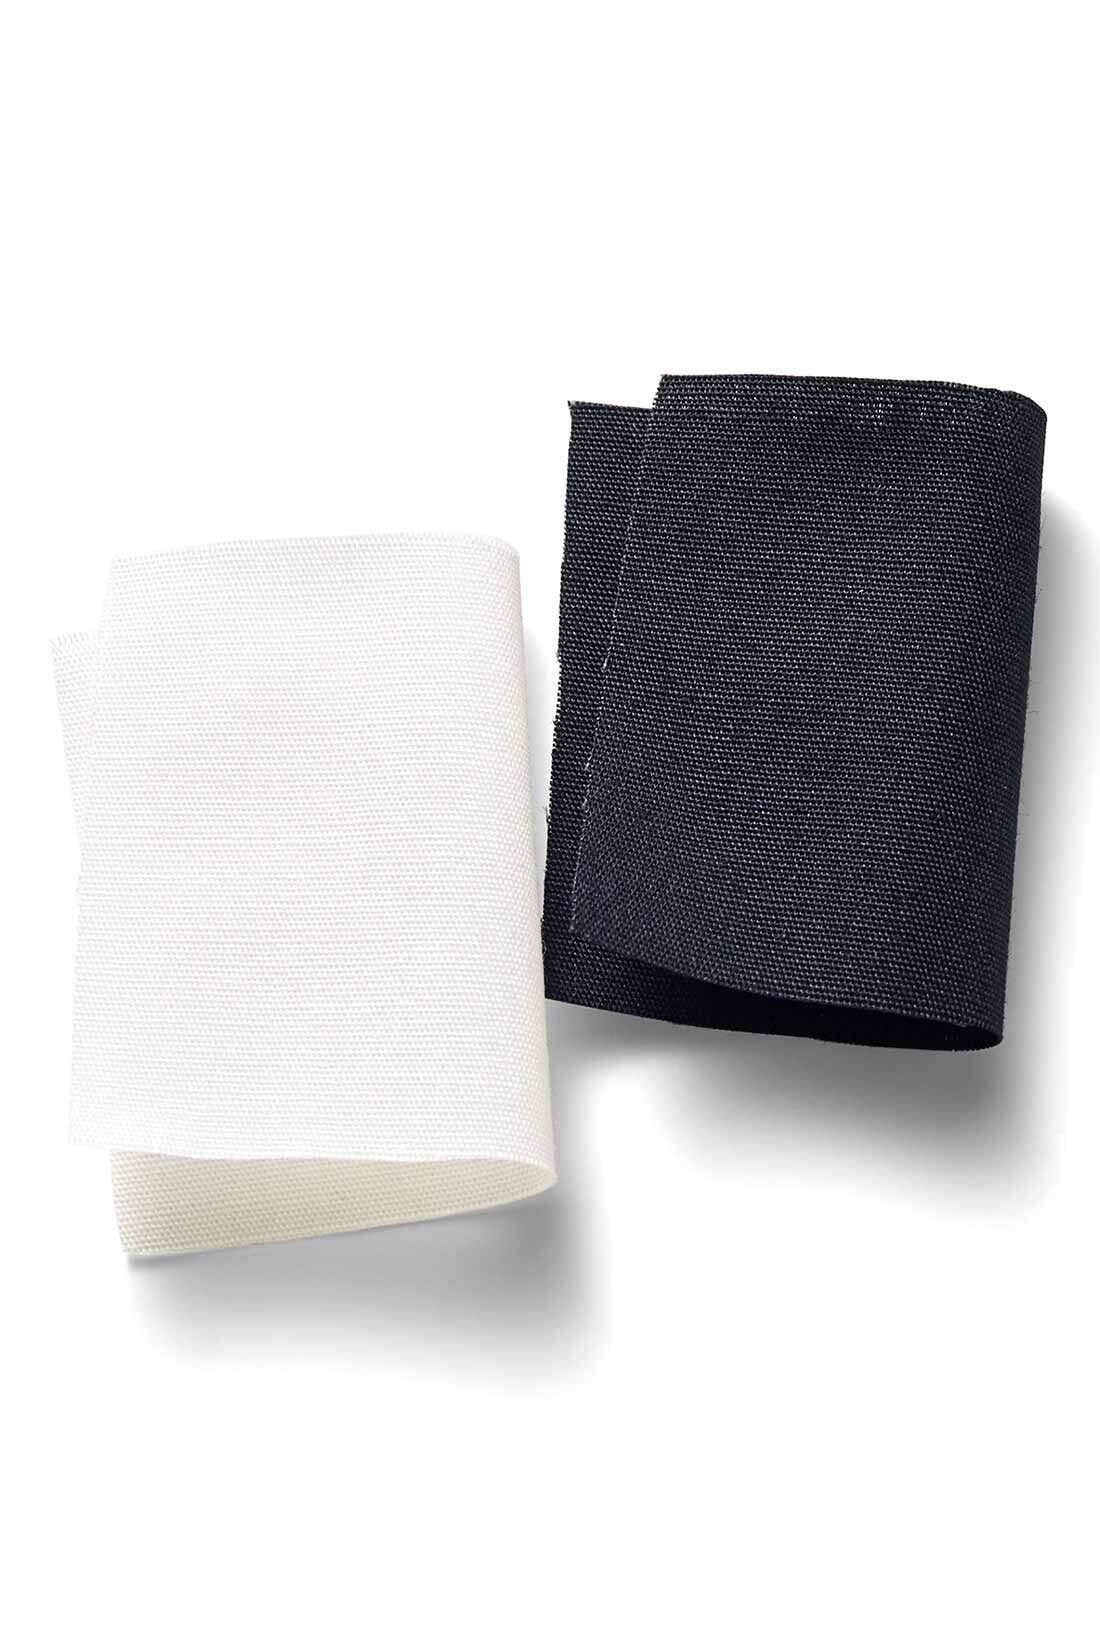 MEDE19F|MEDE19F　ピューリタンカラーシャツ〈ホワイト〉|適度な張りのあるポリエステルコットンの布はく素材。甘くなりすぎず、大人感を演出できる素材を吟味しました。